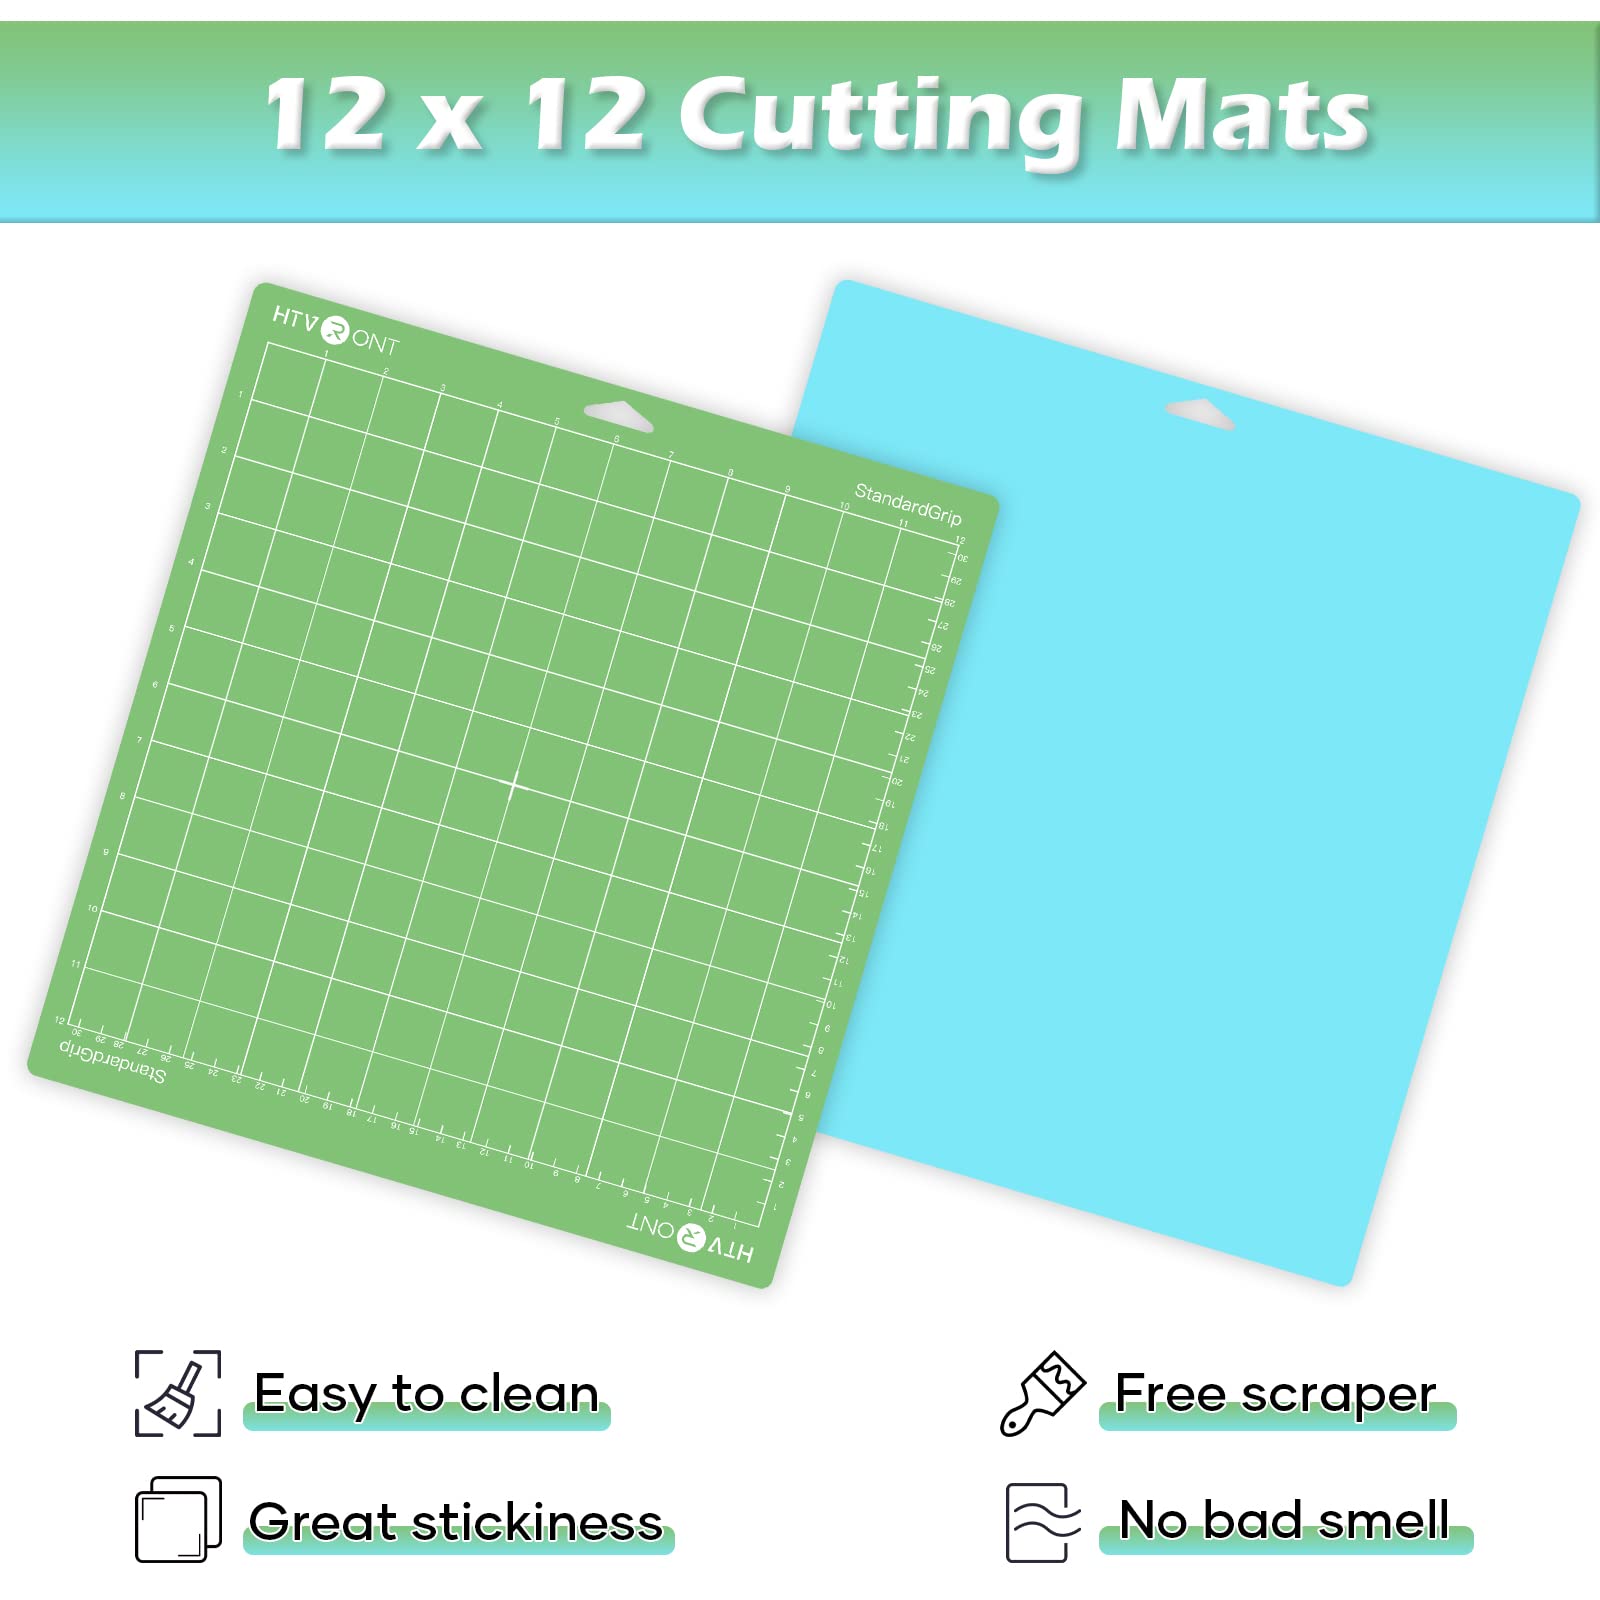  Cricut Variety Pack(1 StrongGrip, 1 LightGrip, 1 StandardGrip)  Adhesive Cutting Mat 12x12, Cutting Mat For Cricut Maker/Cricut Explore,  Use with Light, Medium, & Heavy-Weight Materials, (3CT)